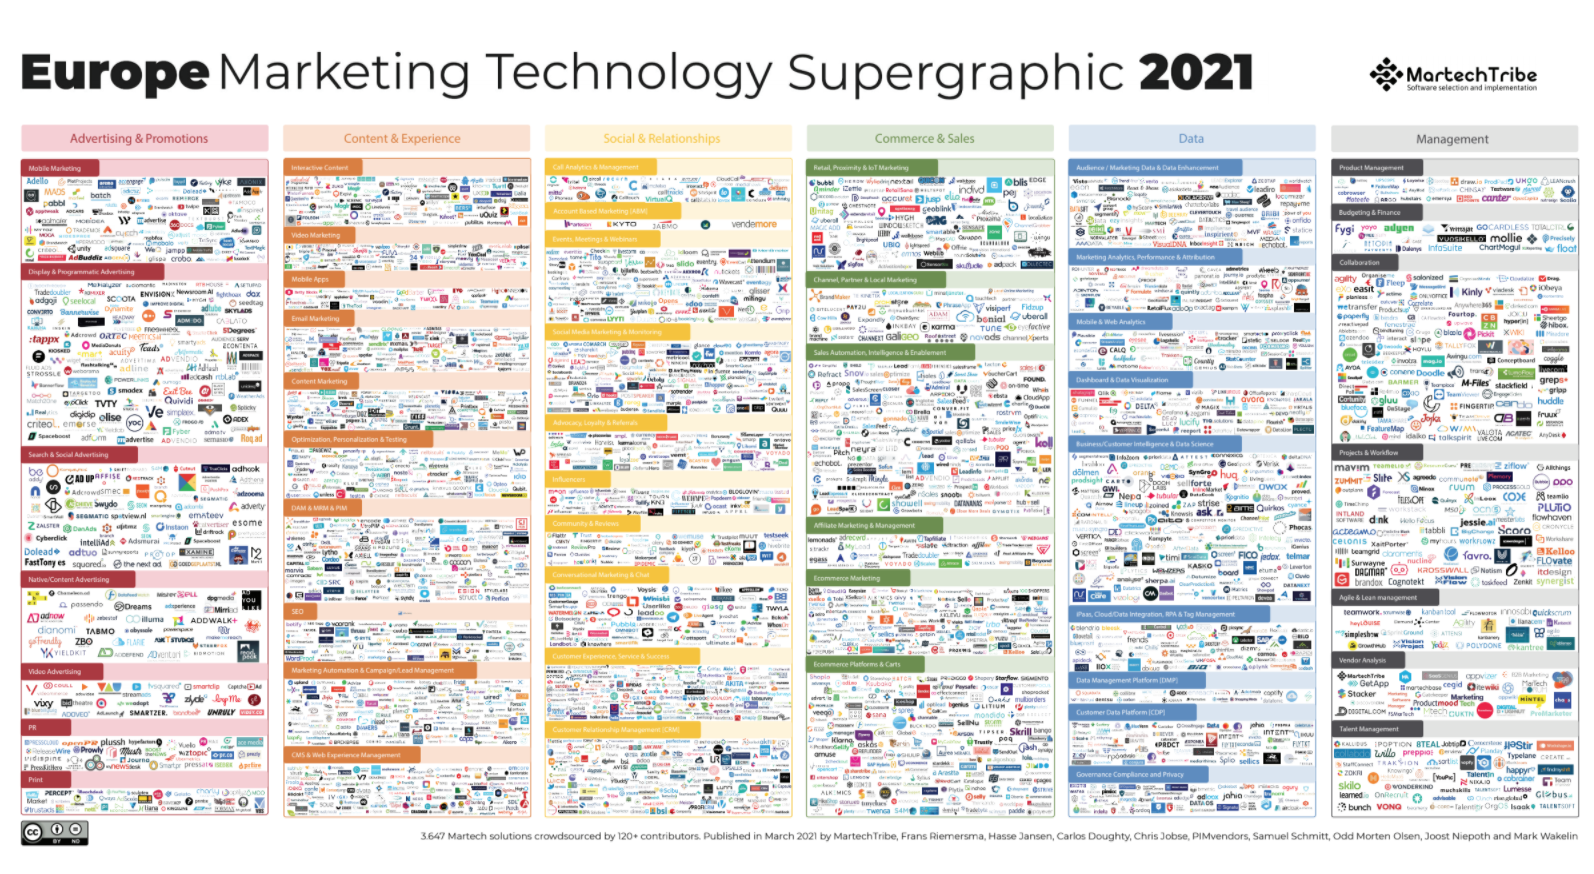 Martech in Europa: la Europe Marketing Technology Supergraphic 2021